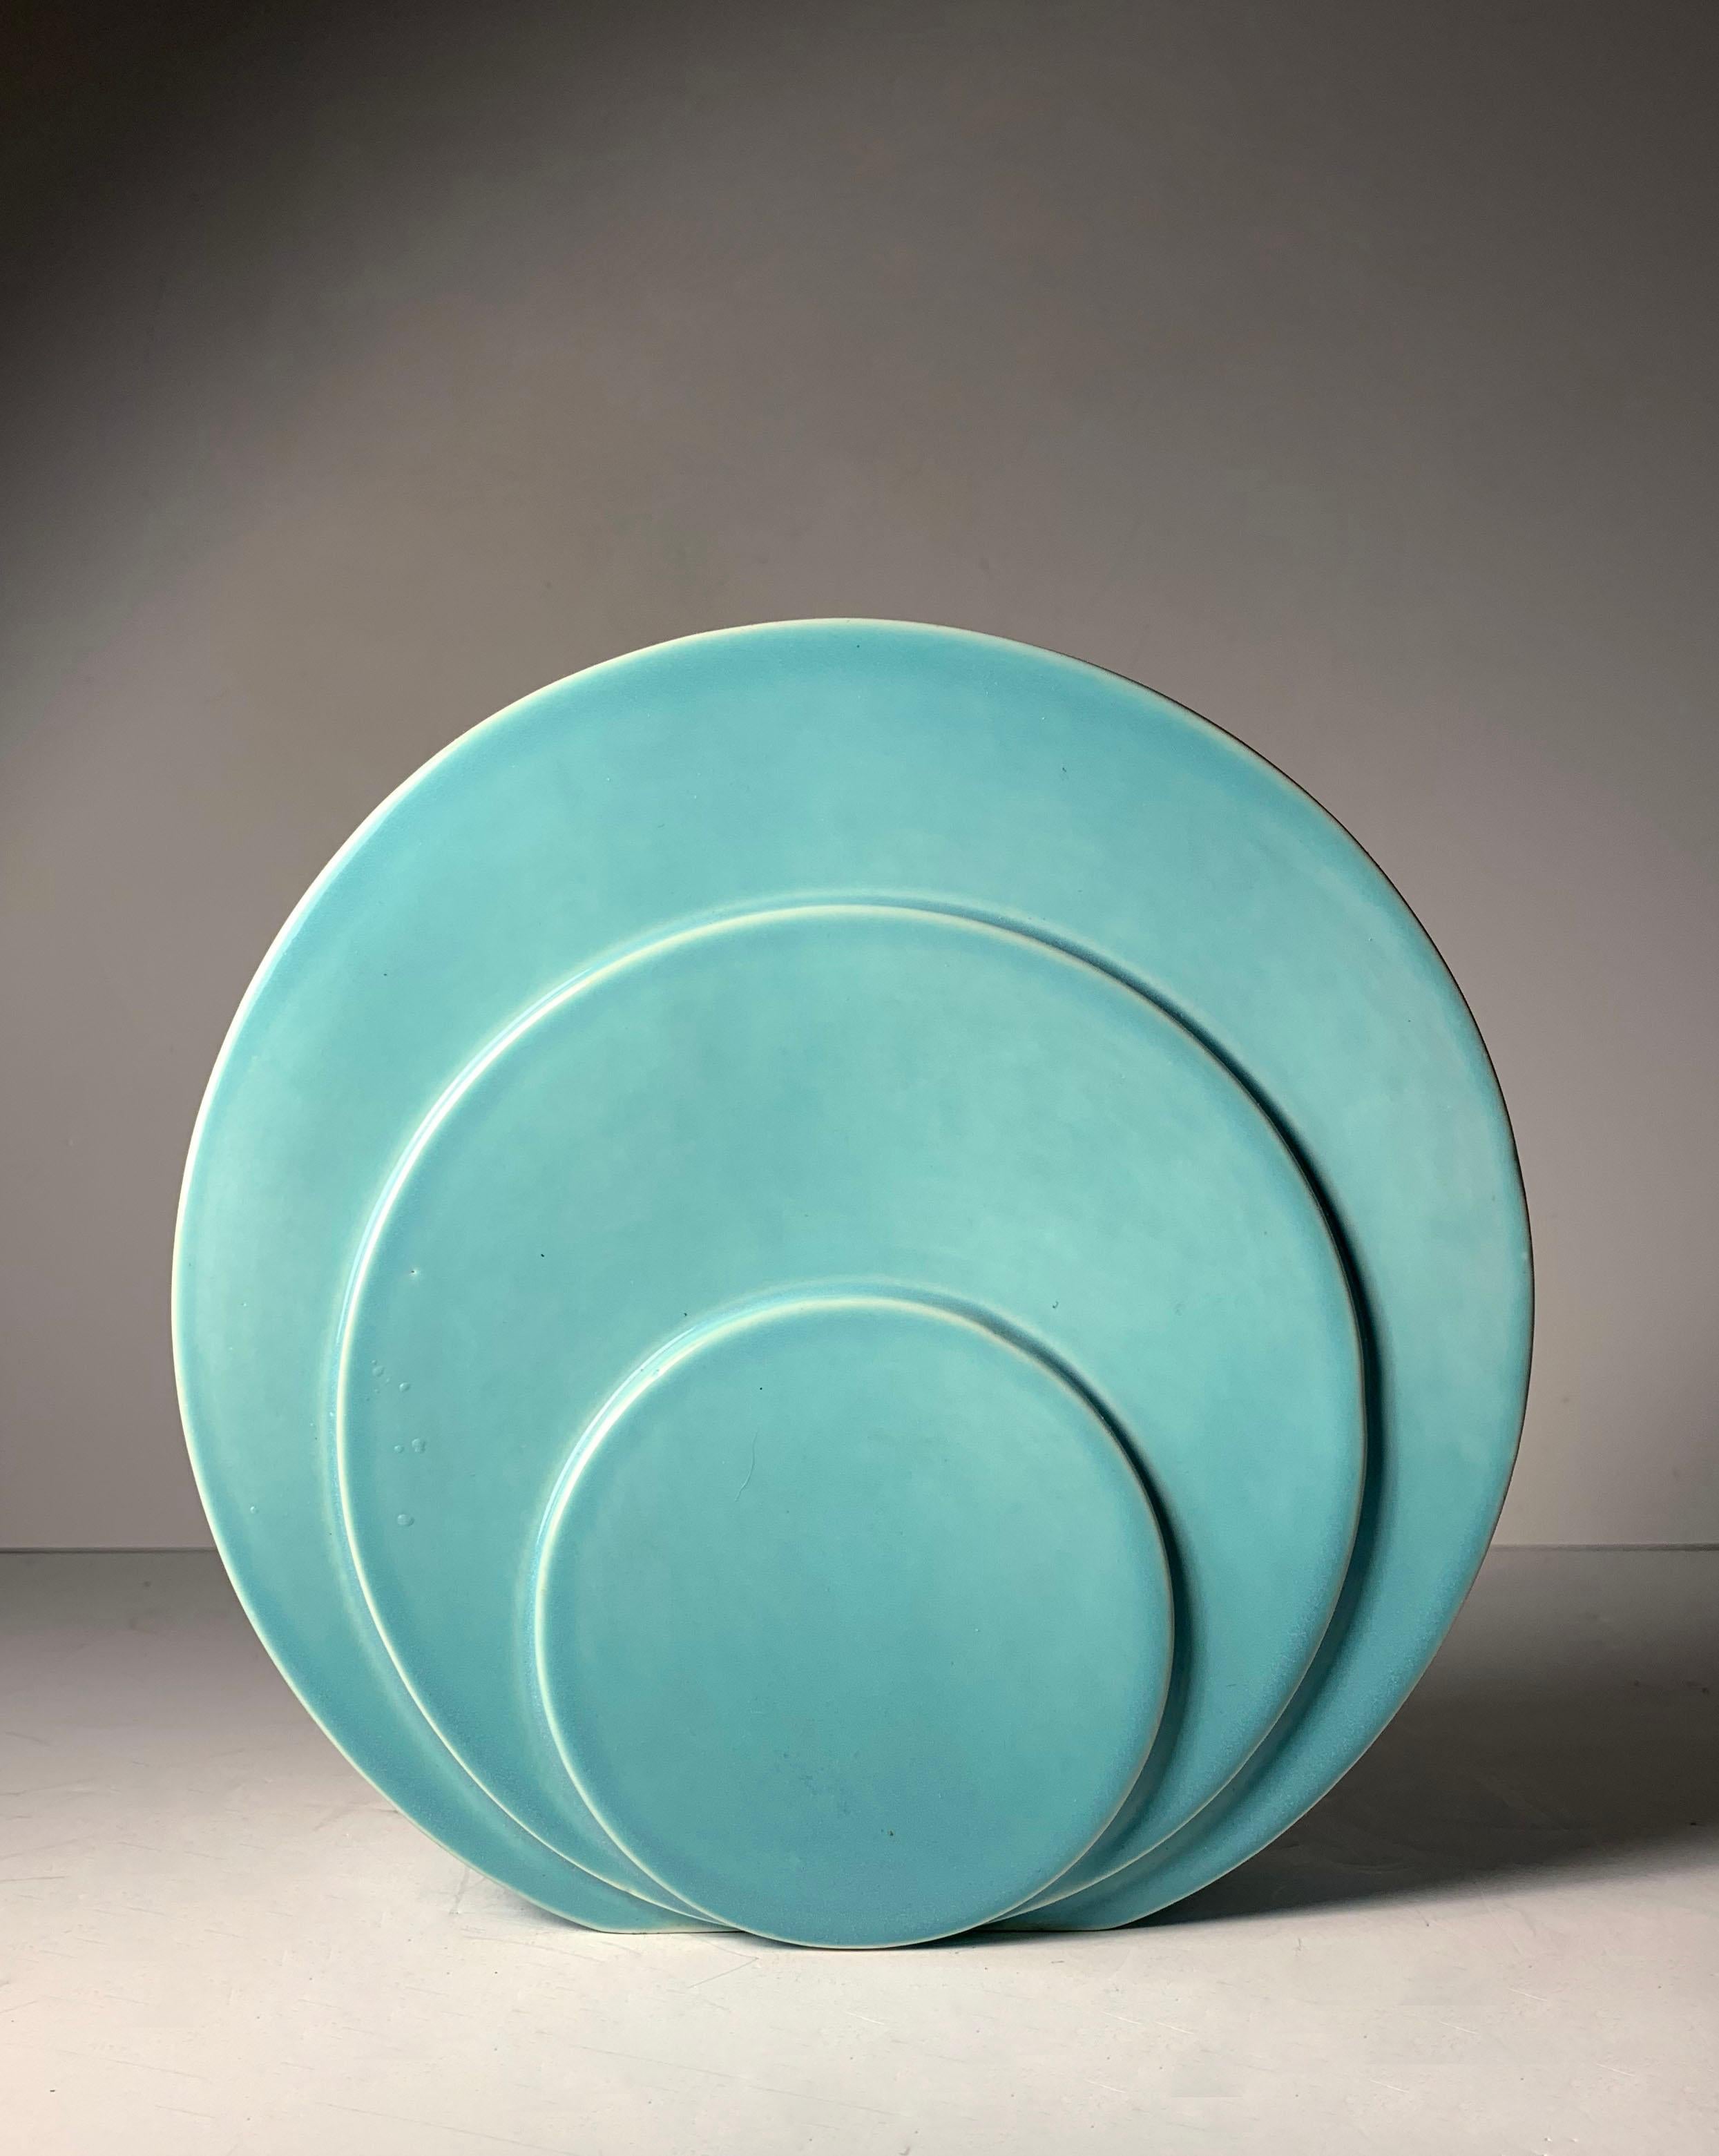 Vintage Art Deco AQUA Turquoise Circlet/Disc/Streamline Moderne vase designed by G. McStay Jackson for Trenton Potteries Co., division Trent Art China (TAC), ca. 1935-1942. Stamped in blue ink on bottom: The Trenton Potteries Co., Trenton NJ, TAC.